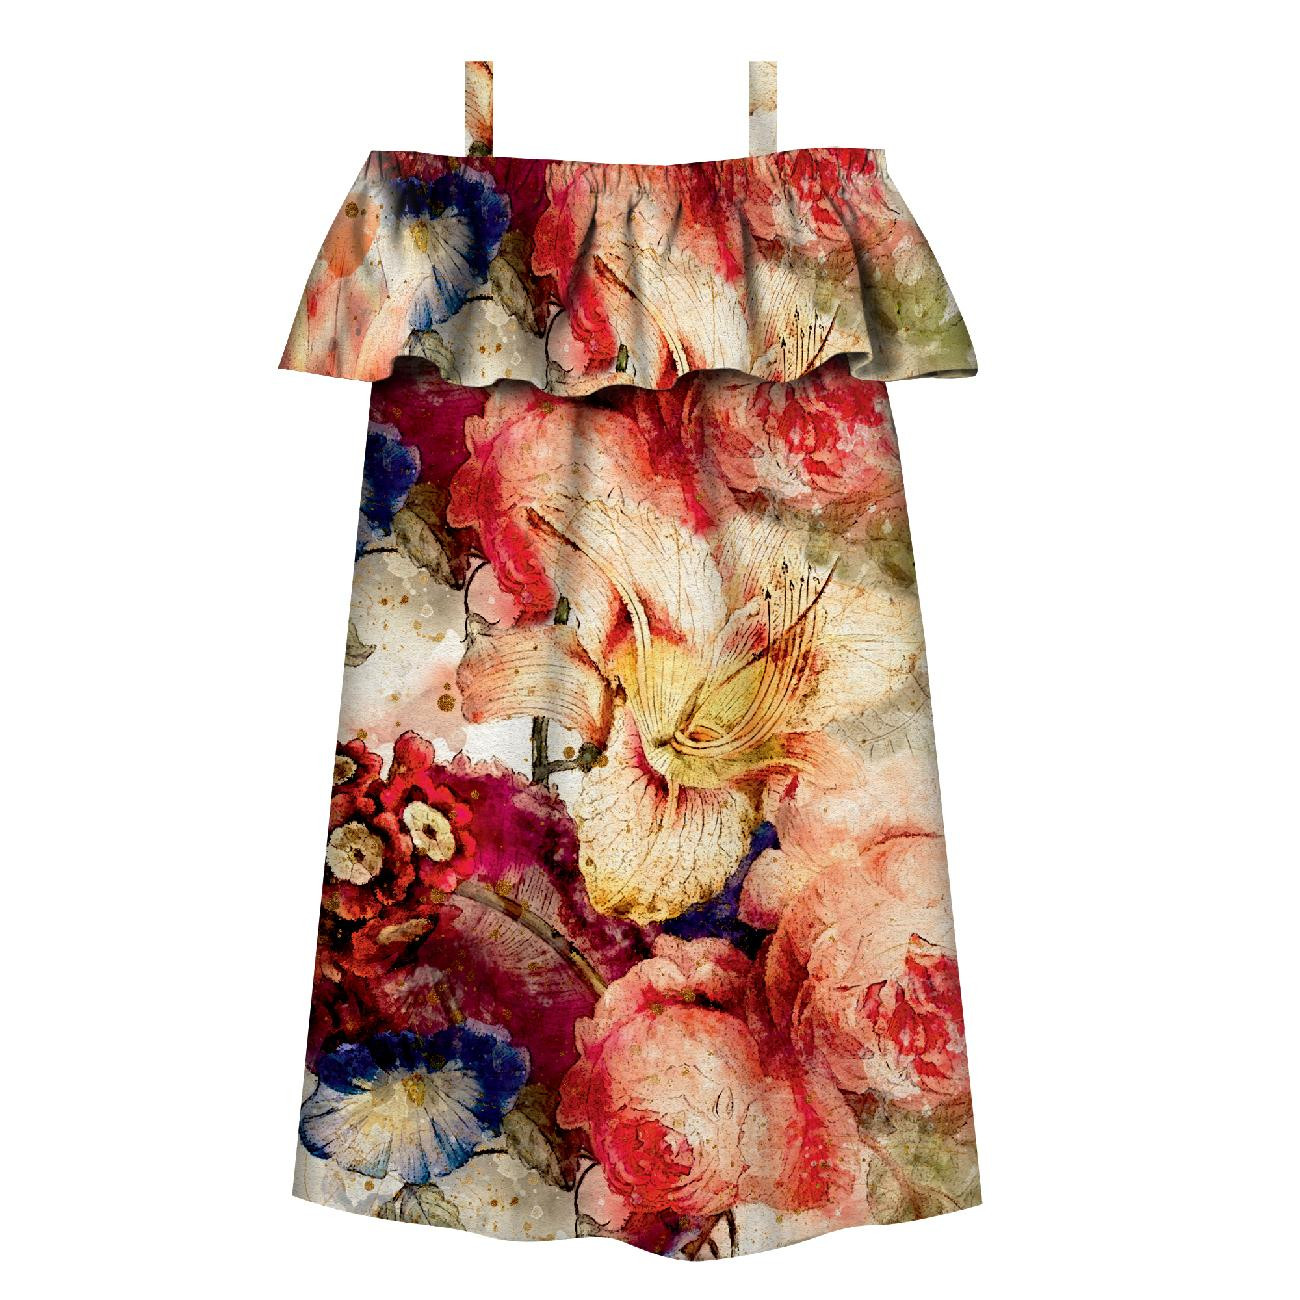 Carmenausschnitt Kleid (LILI) - WATERCOLOR FLOWERS MS. 5 - Nähset 